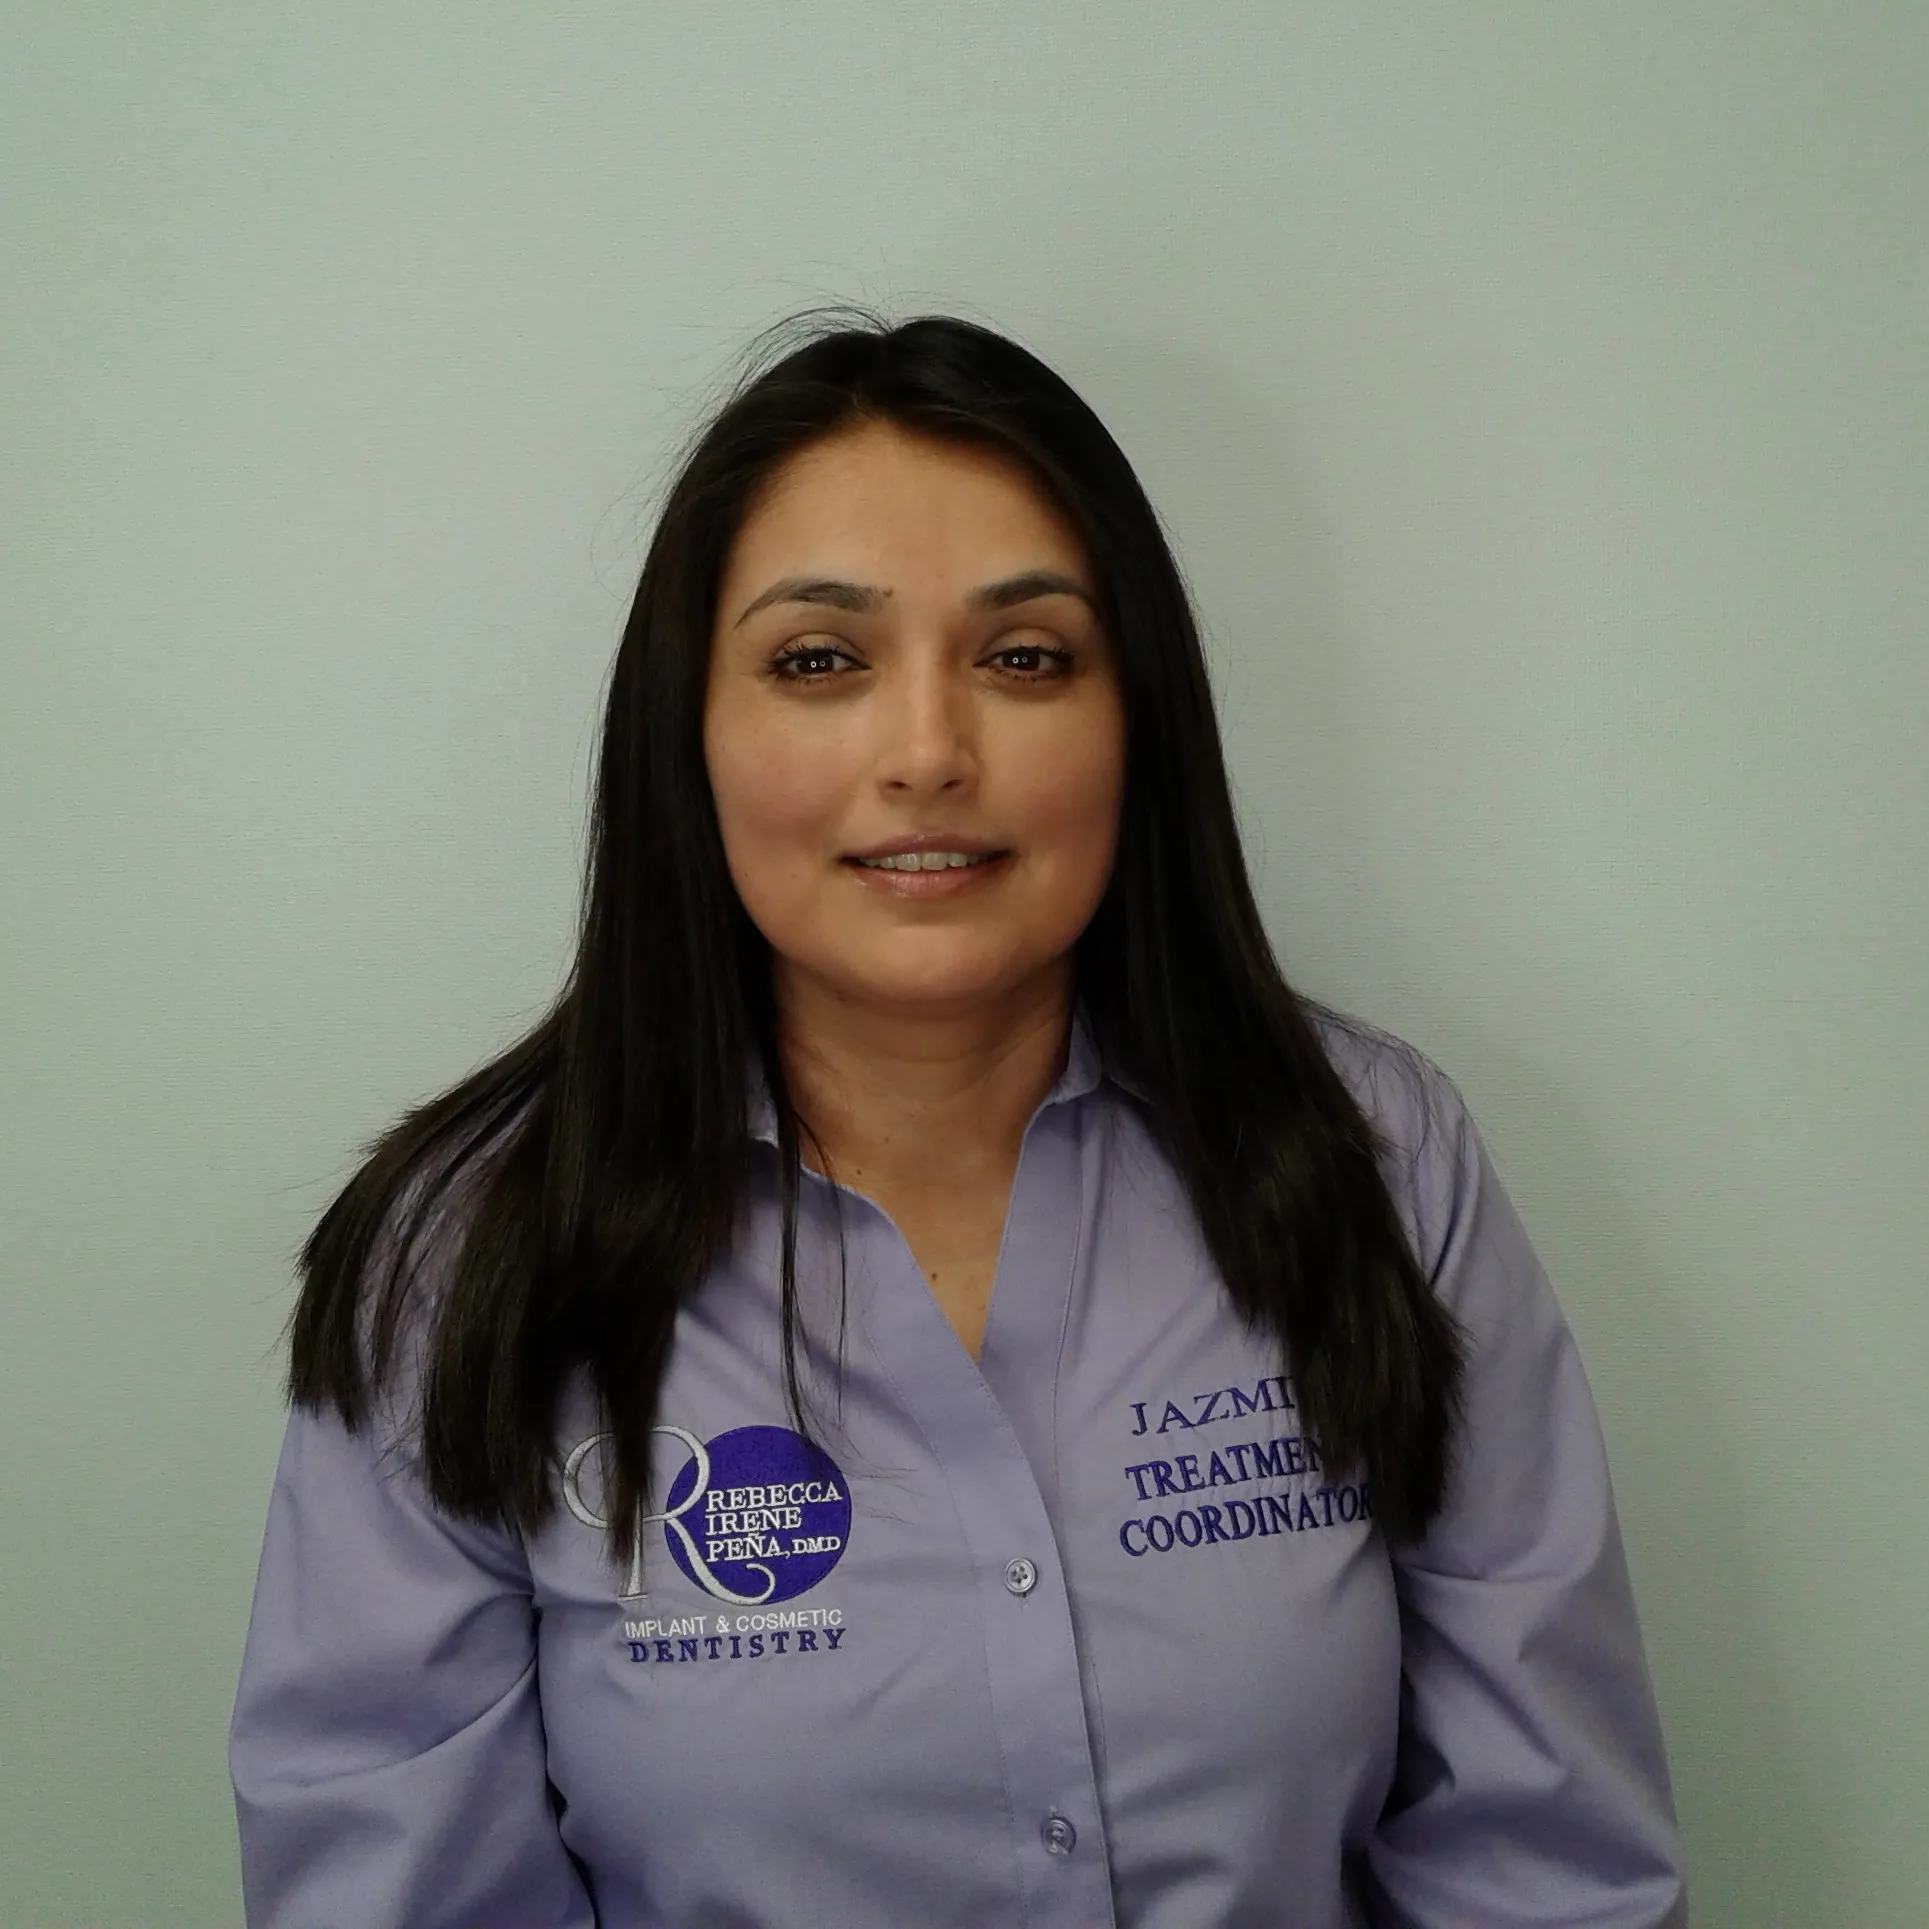 Jazmin – Front Office & Treatment Coordinator at Rebecca Irene A. Peña, DMD's practice